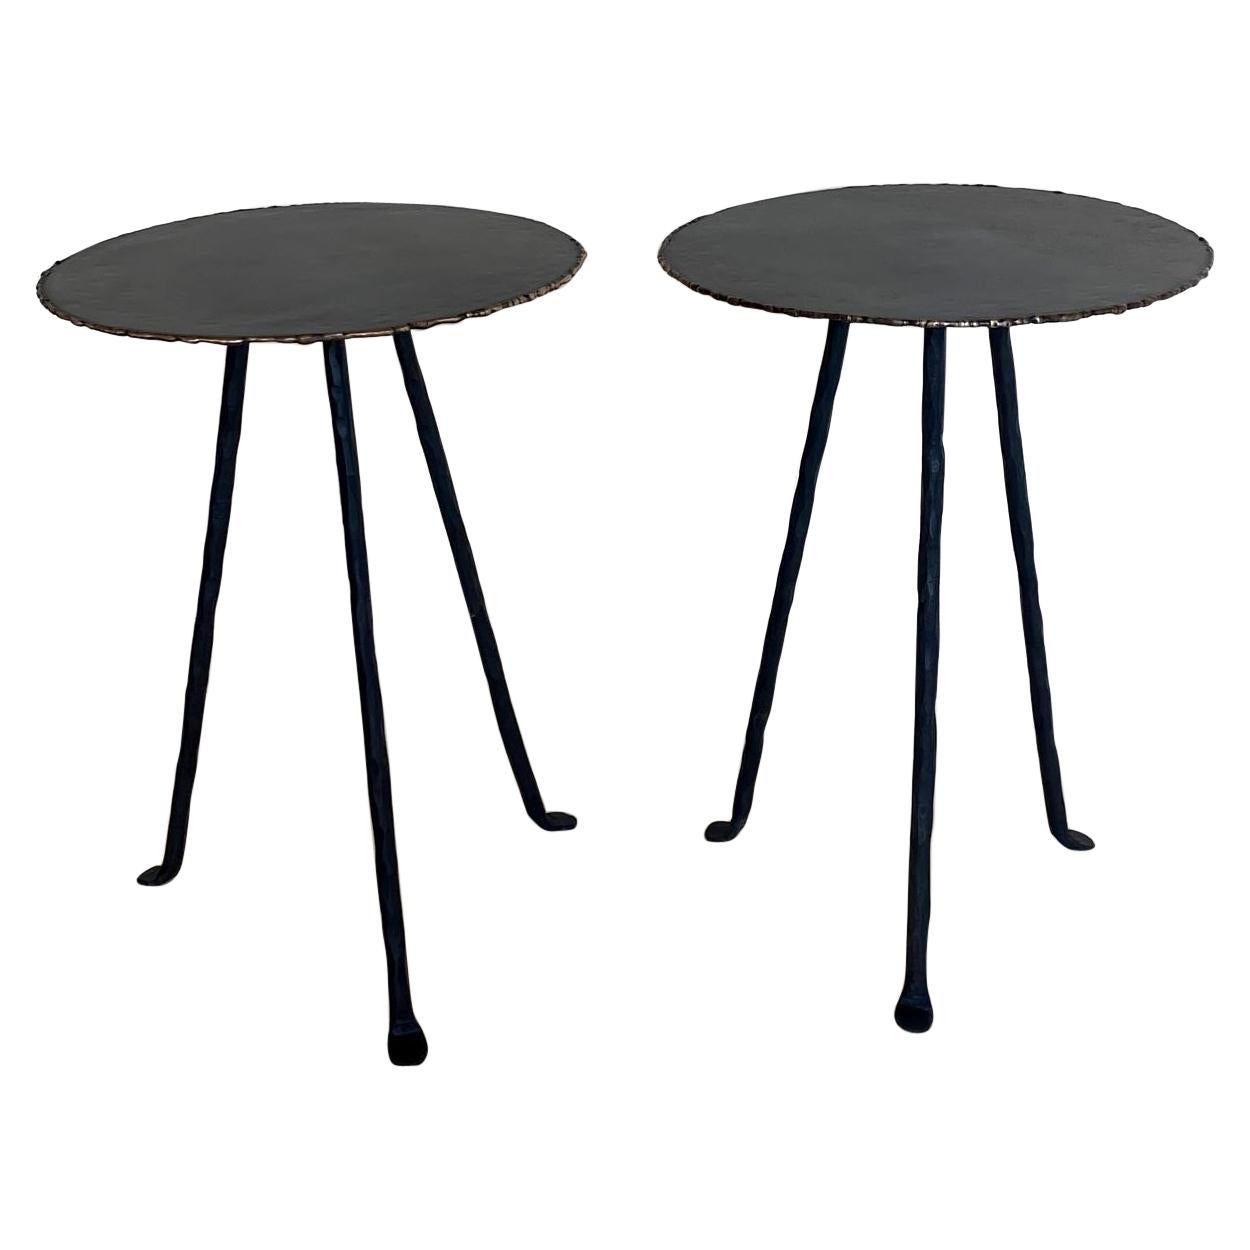 Round Tri-Pod Tables with Bronze Edge